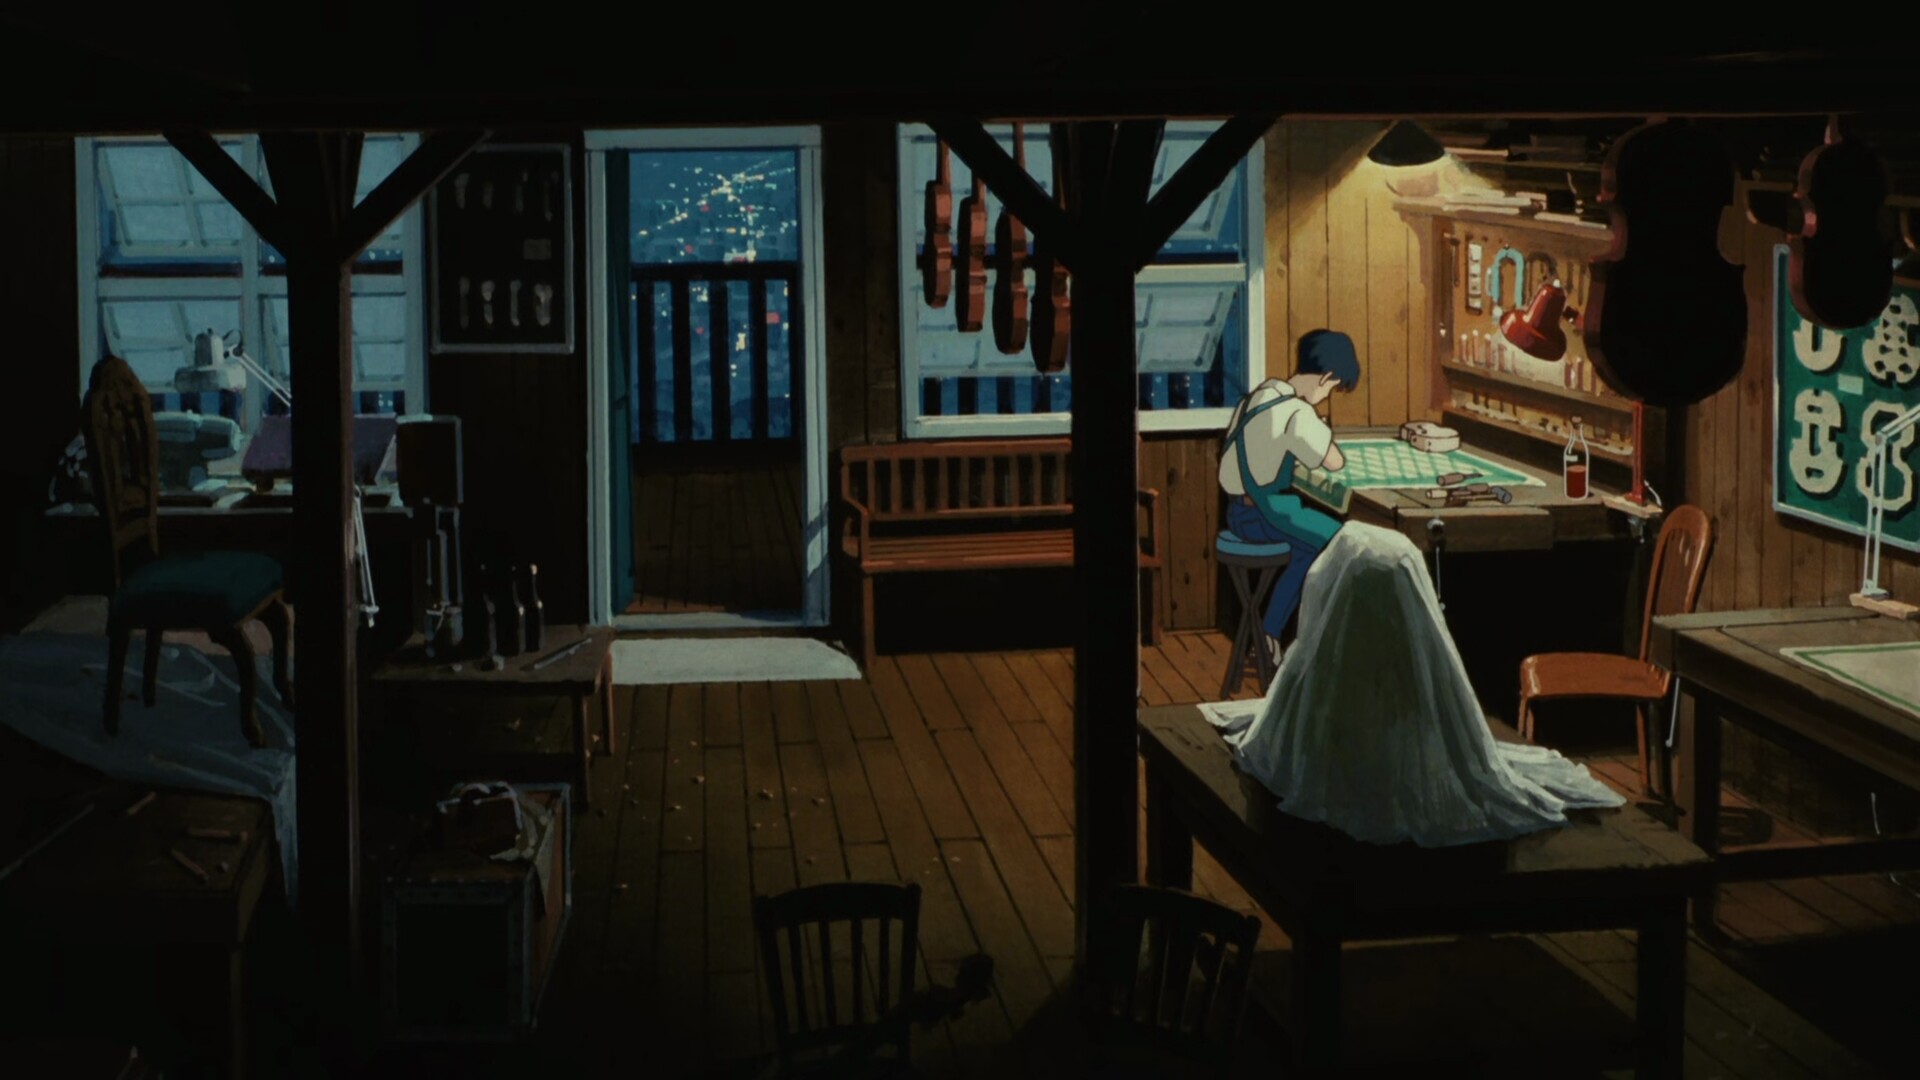 Whisper of the Heart: A tale based on the screenplay from the legendary animator Hayao Miyazaki. 1920x1080 Full HD Wallpaper.